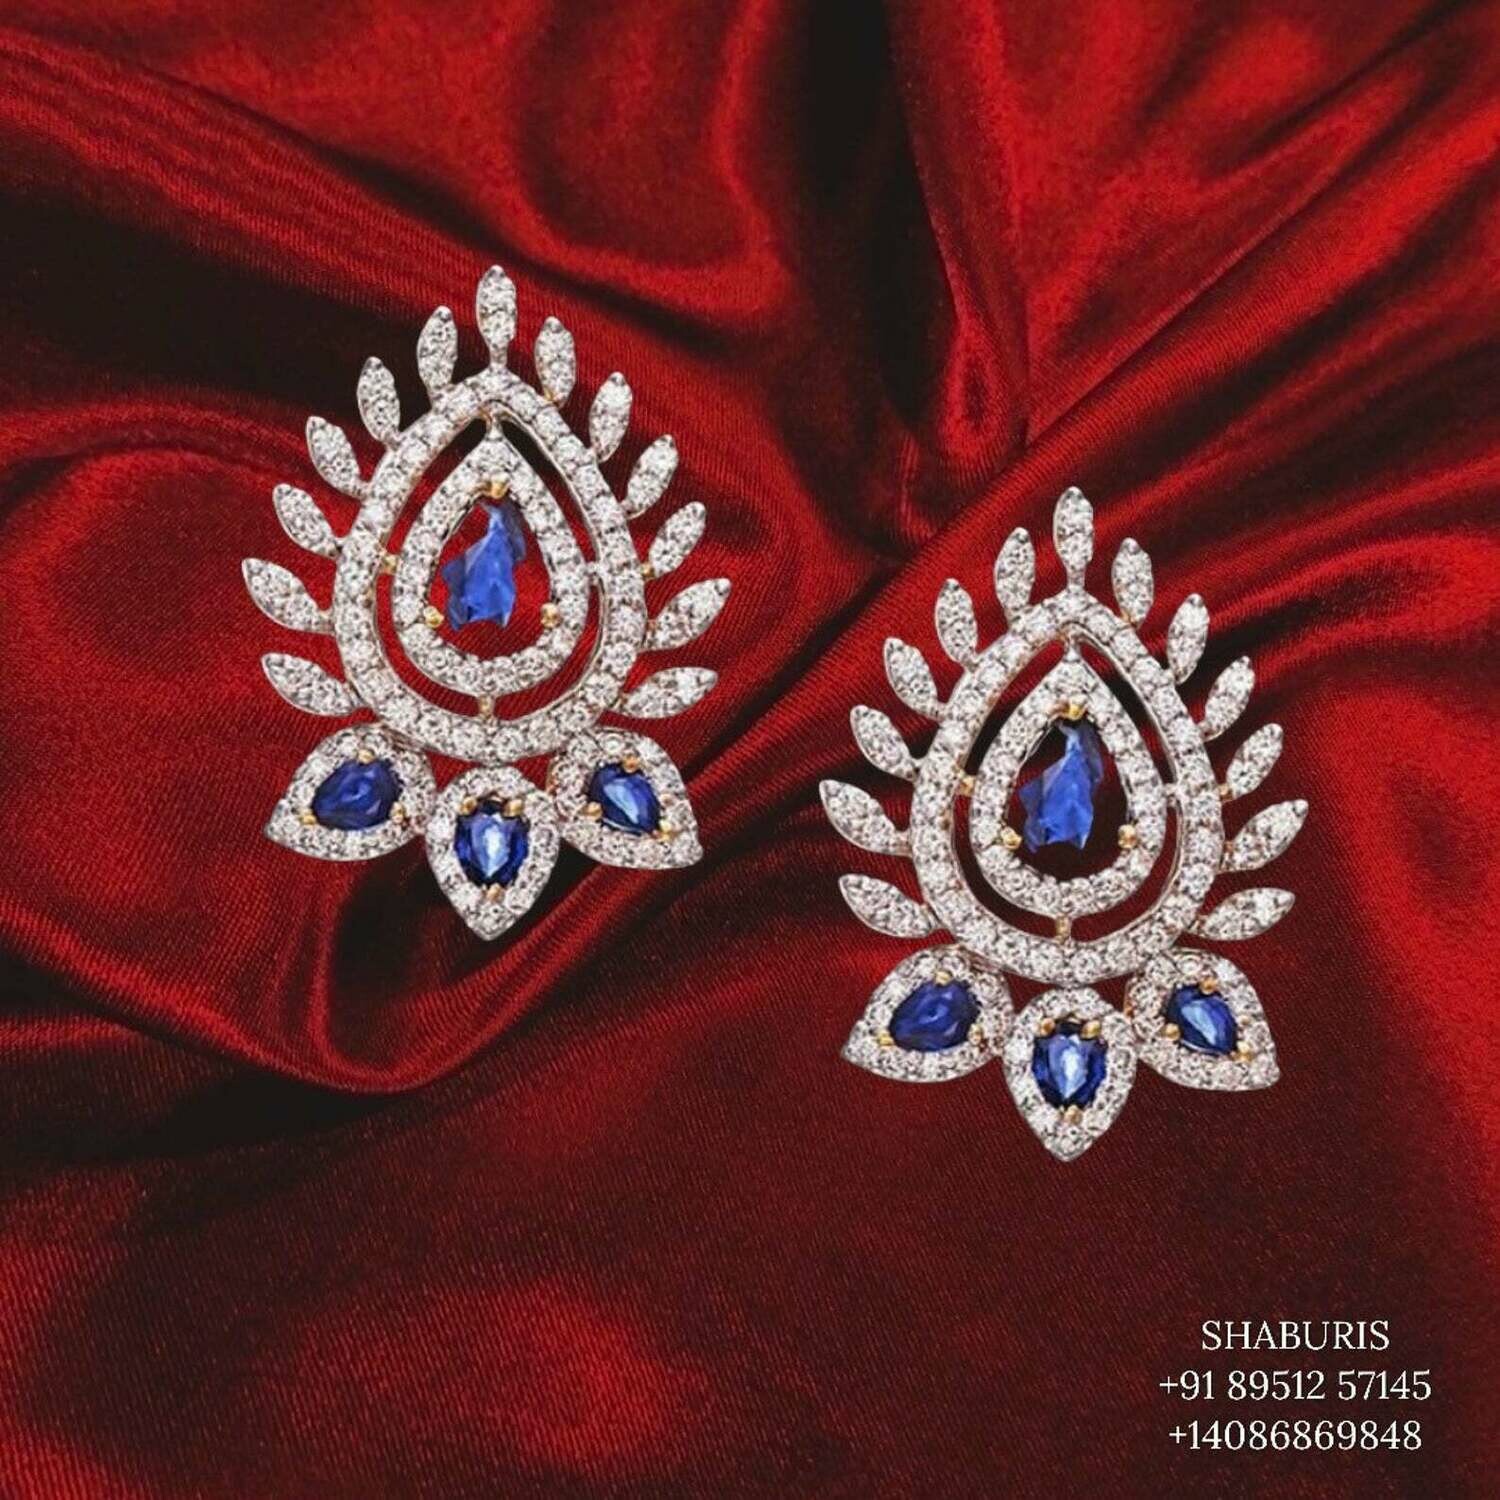 Indian Jewellery Designs,South Indian Jewellery,South Indian Jewelry,diamond studs,latest indian jewellery Designs - NIHIRA-SHABURIS